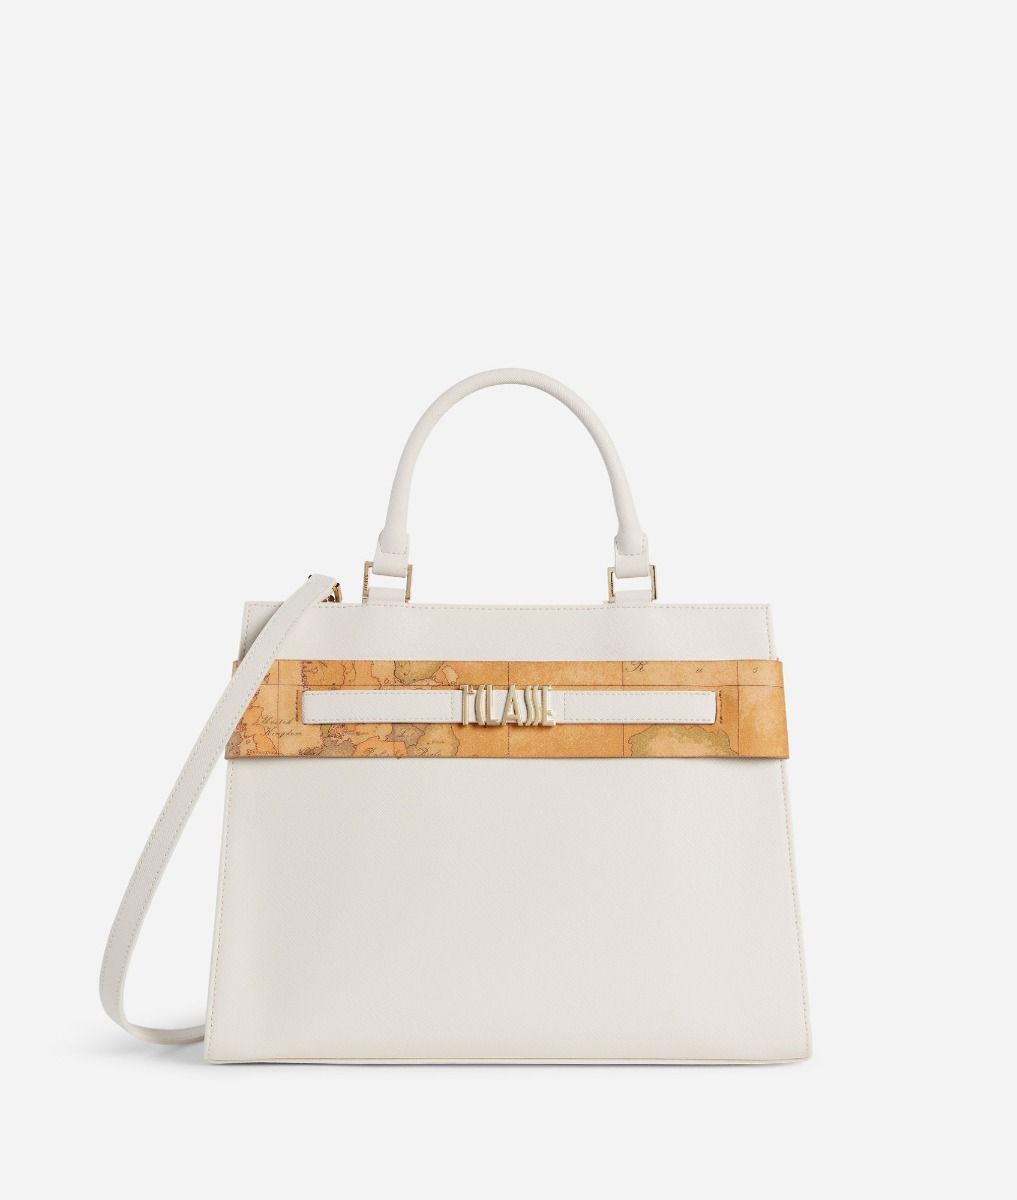 Stylish Bag Handbag in embossed saffiano pastel white,front